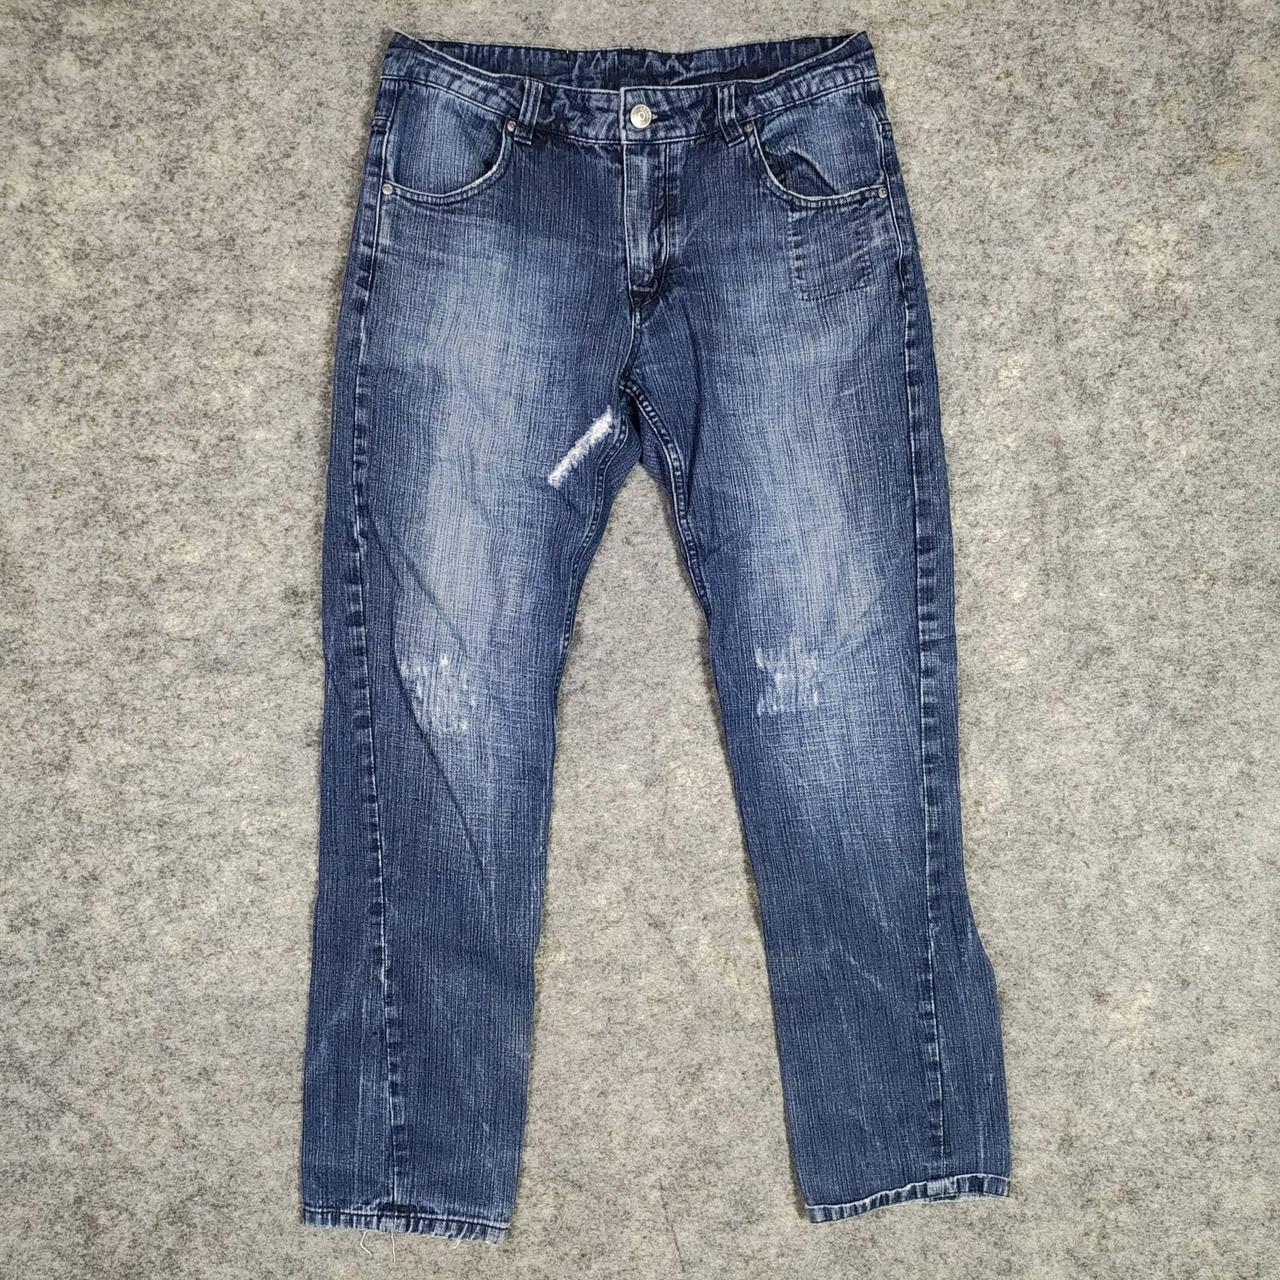 Zippo Lighters Y2K Jeans Mens 34 Straight Leg Mid... - Depop